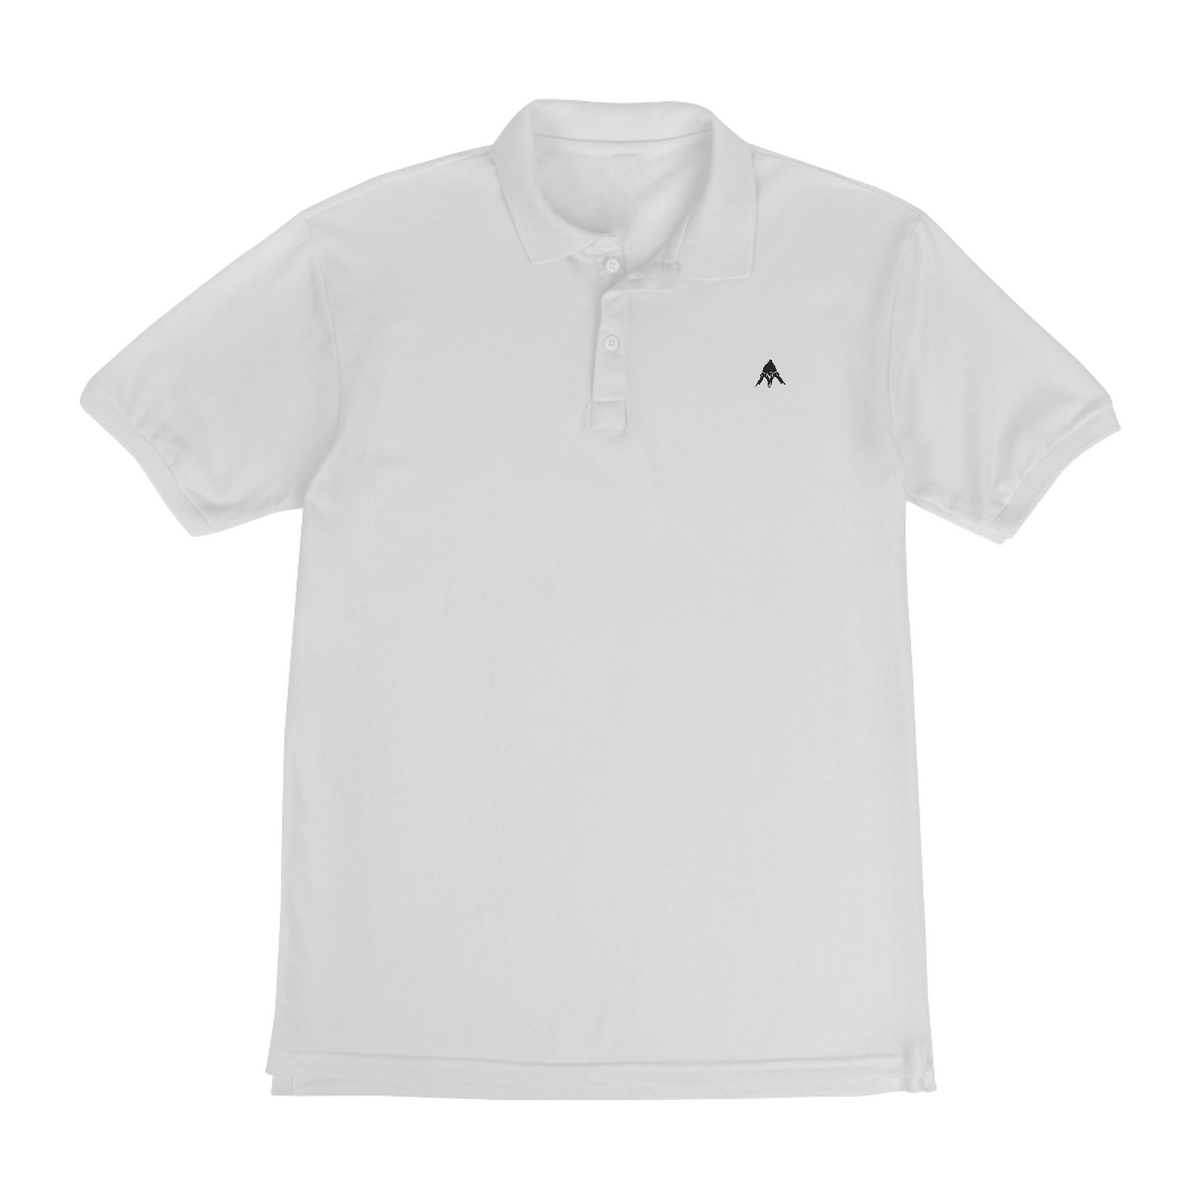 Nome do produto: Camiseta Polo JiujiterOss Logo Preto/Branco